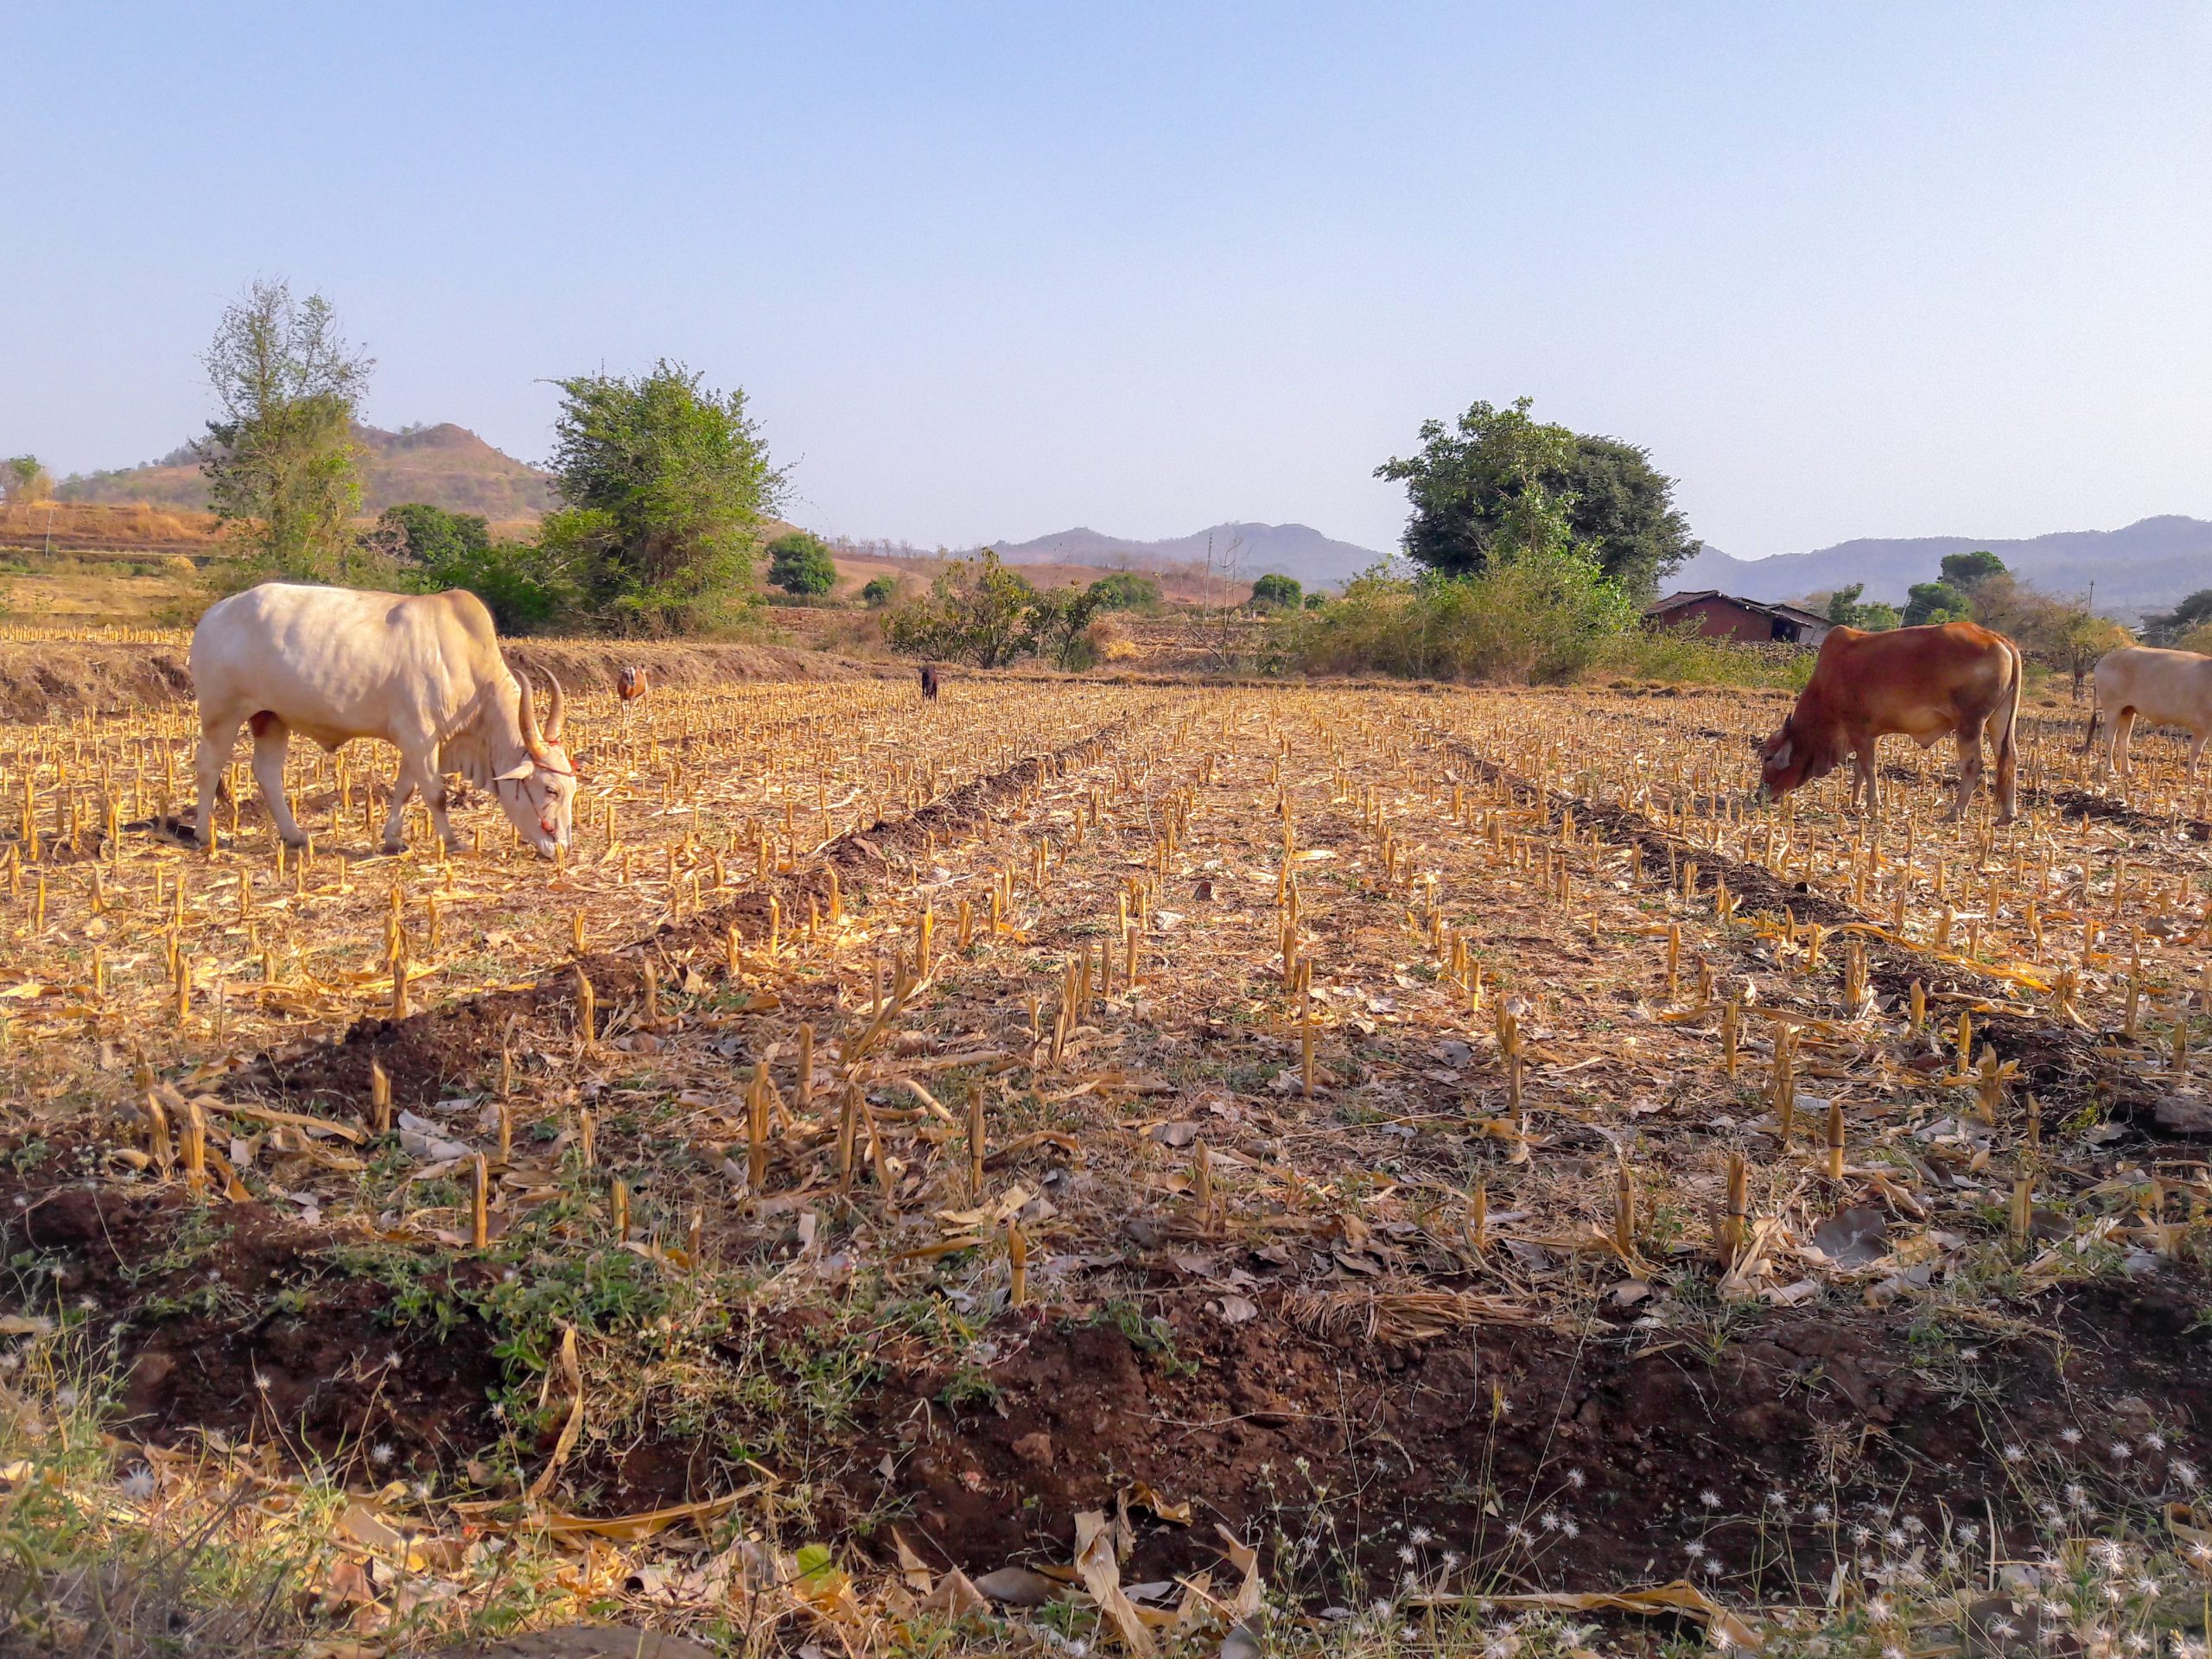 Oxen grazing in a field